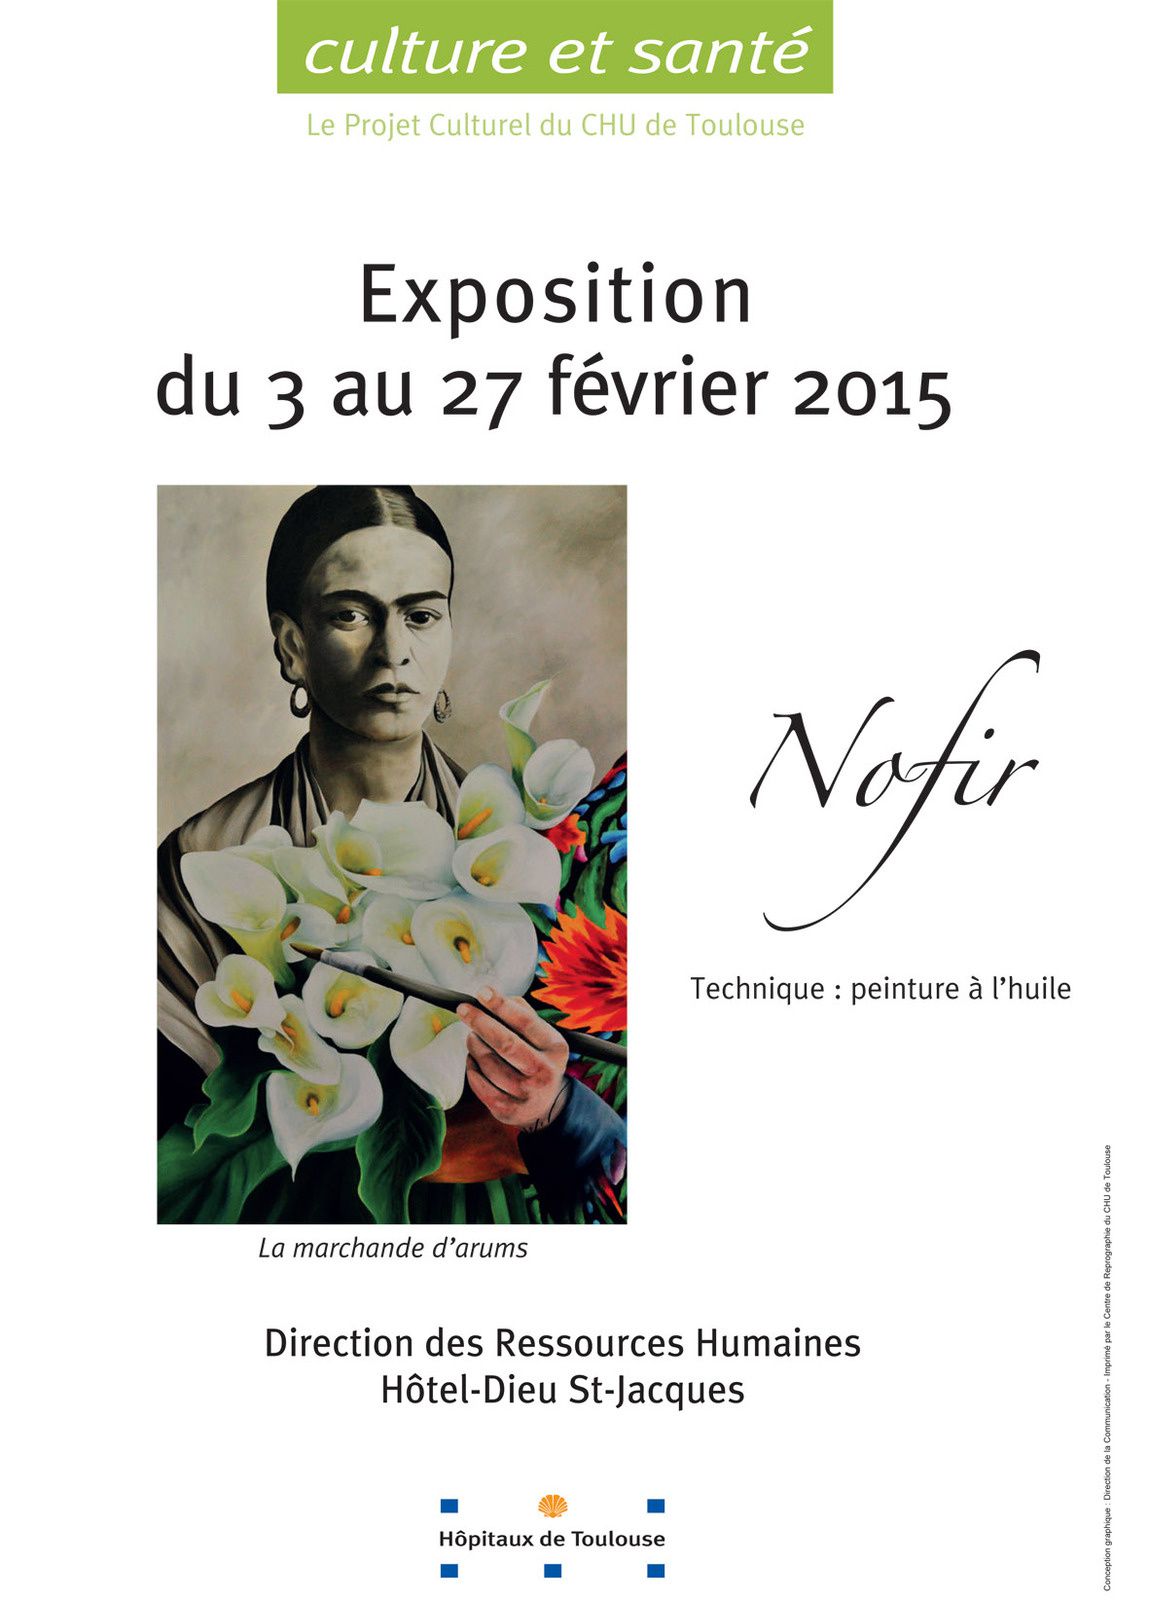 NOFIR expose au CHU de Toulouse